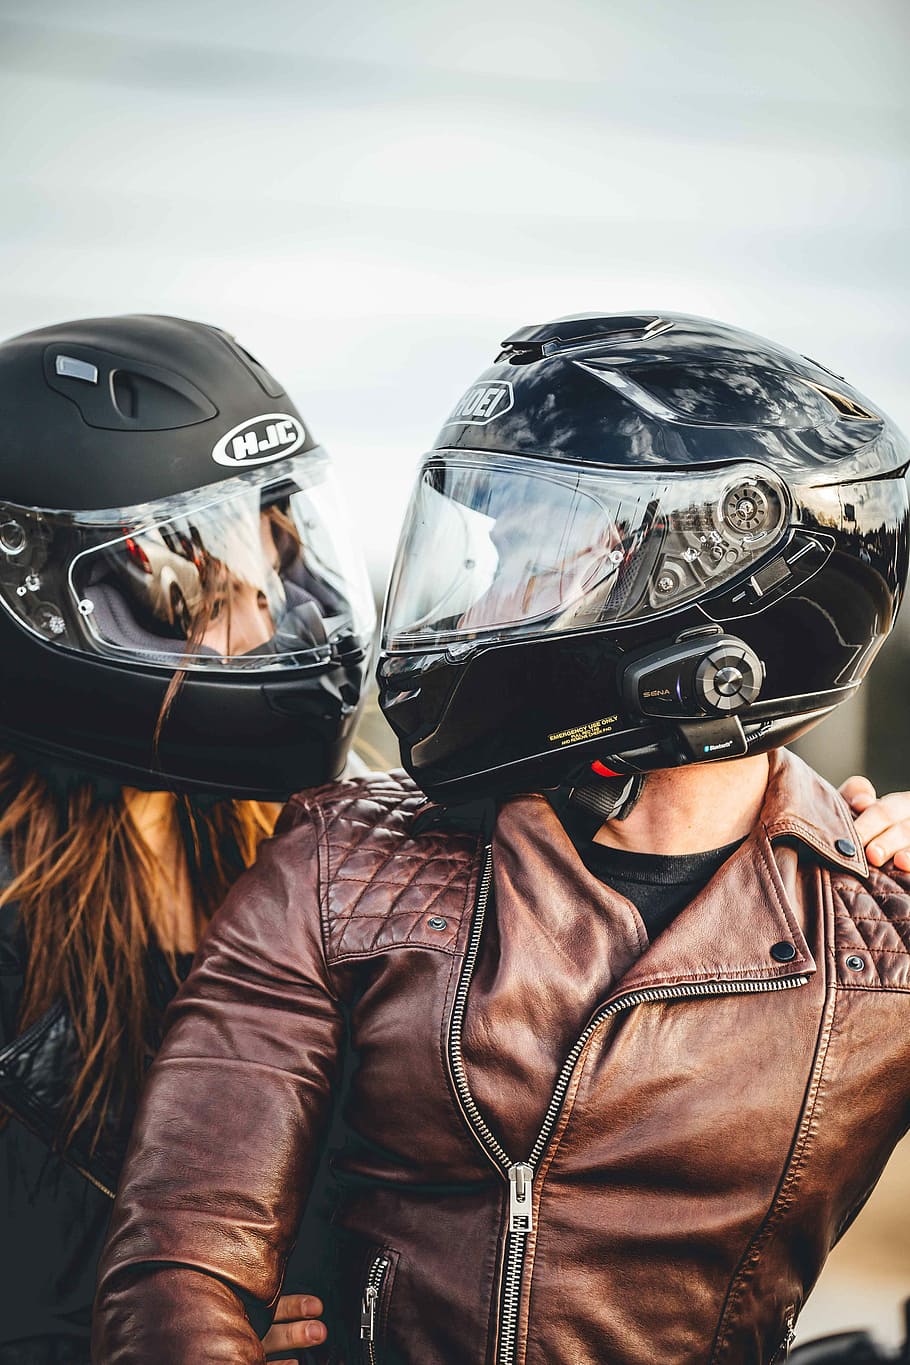 HD wallpaper: man and woman riding motorcycle, helmet, biker